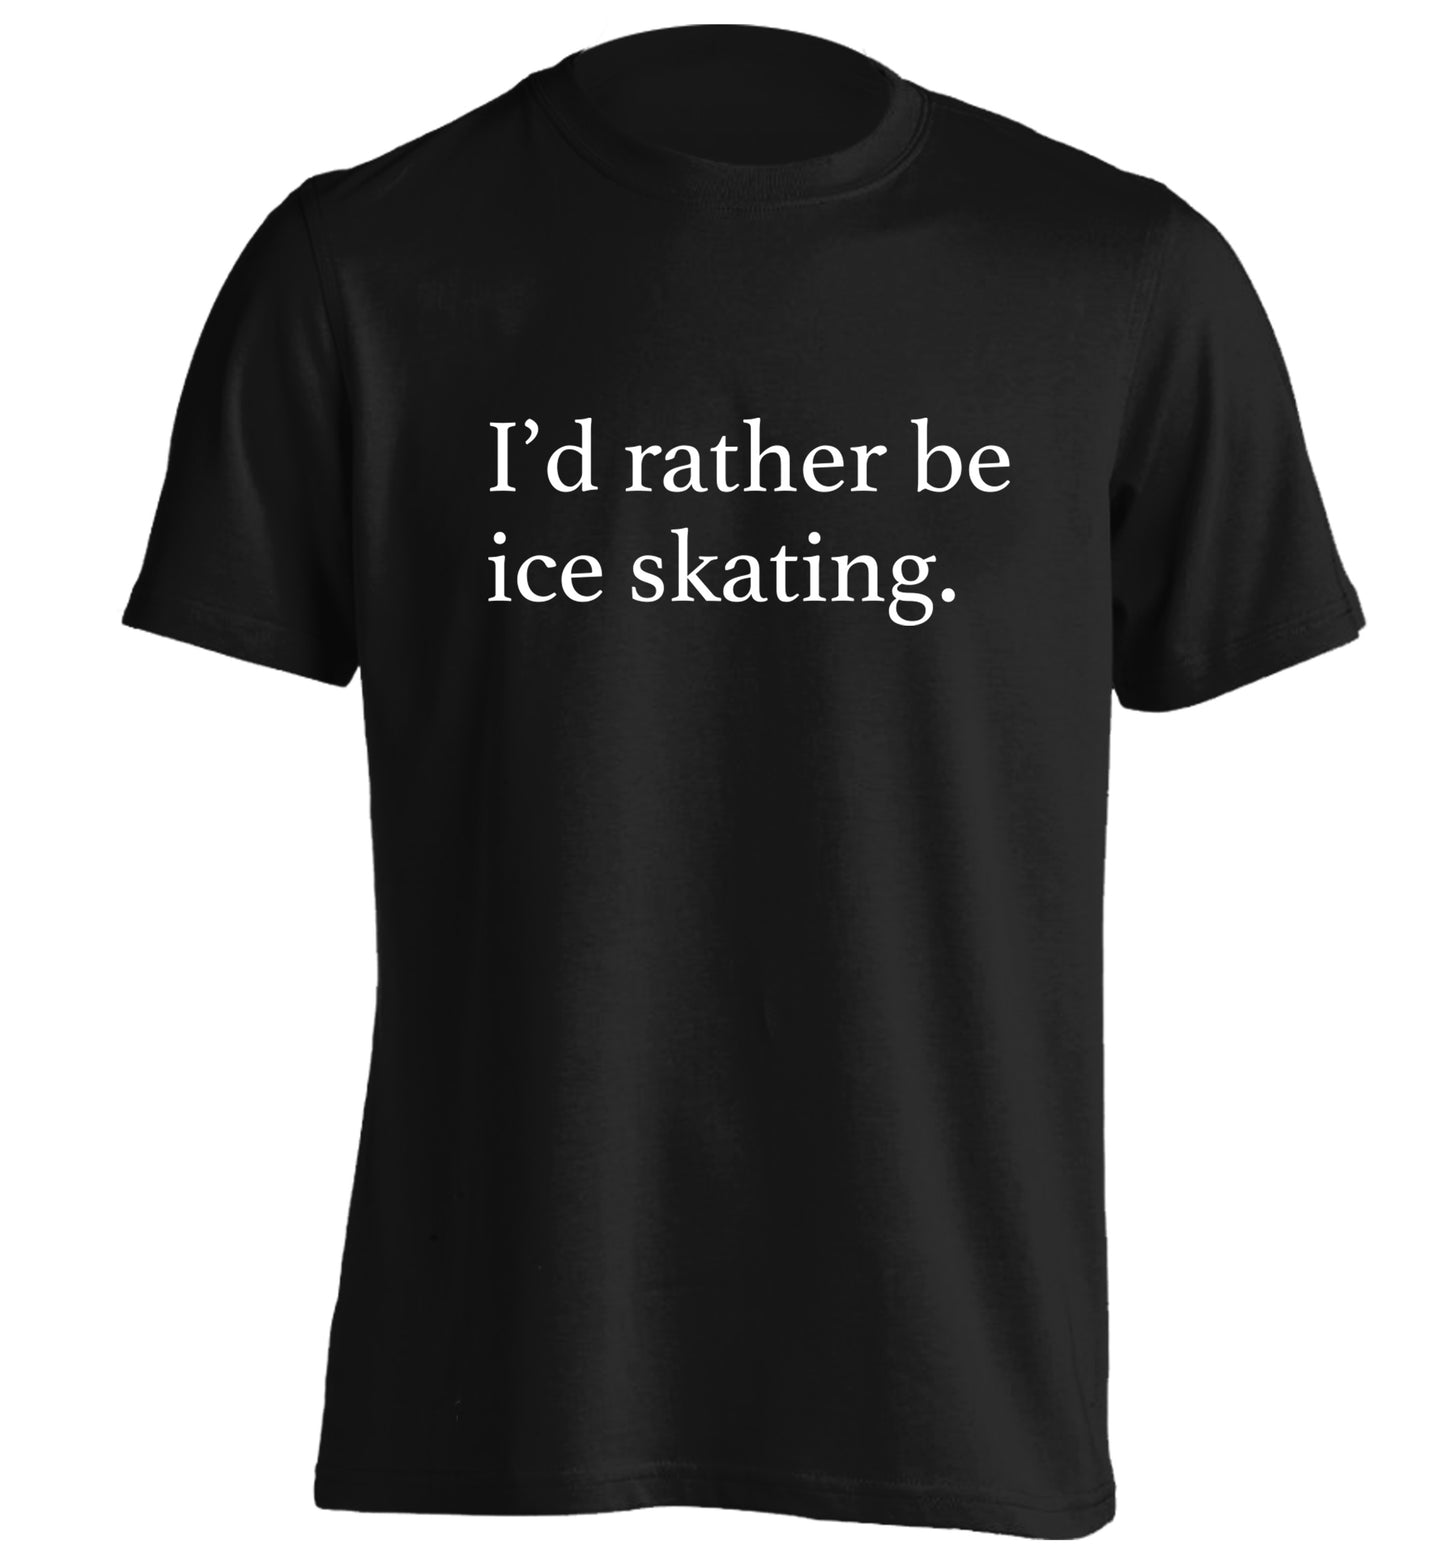 I'd rather be ice skating adults unisexblack Tshirt 2XL